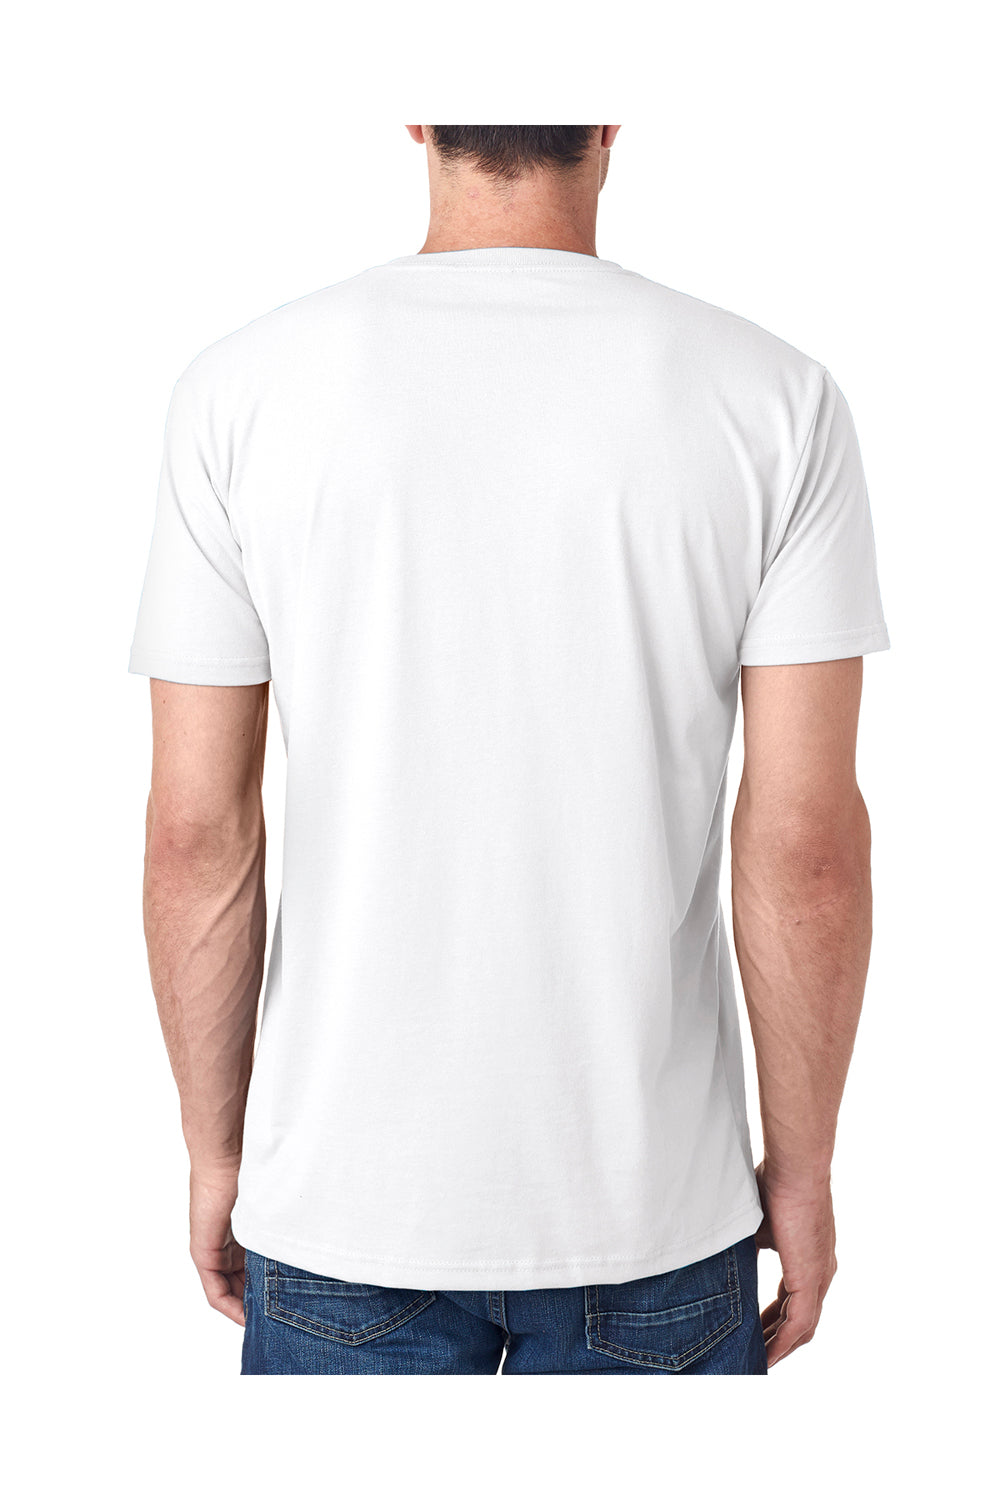 Next Level 6440 Mens Sueded Jersey Short Sleeve V-Neck T-Shirt White Back